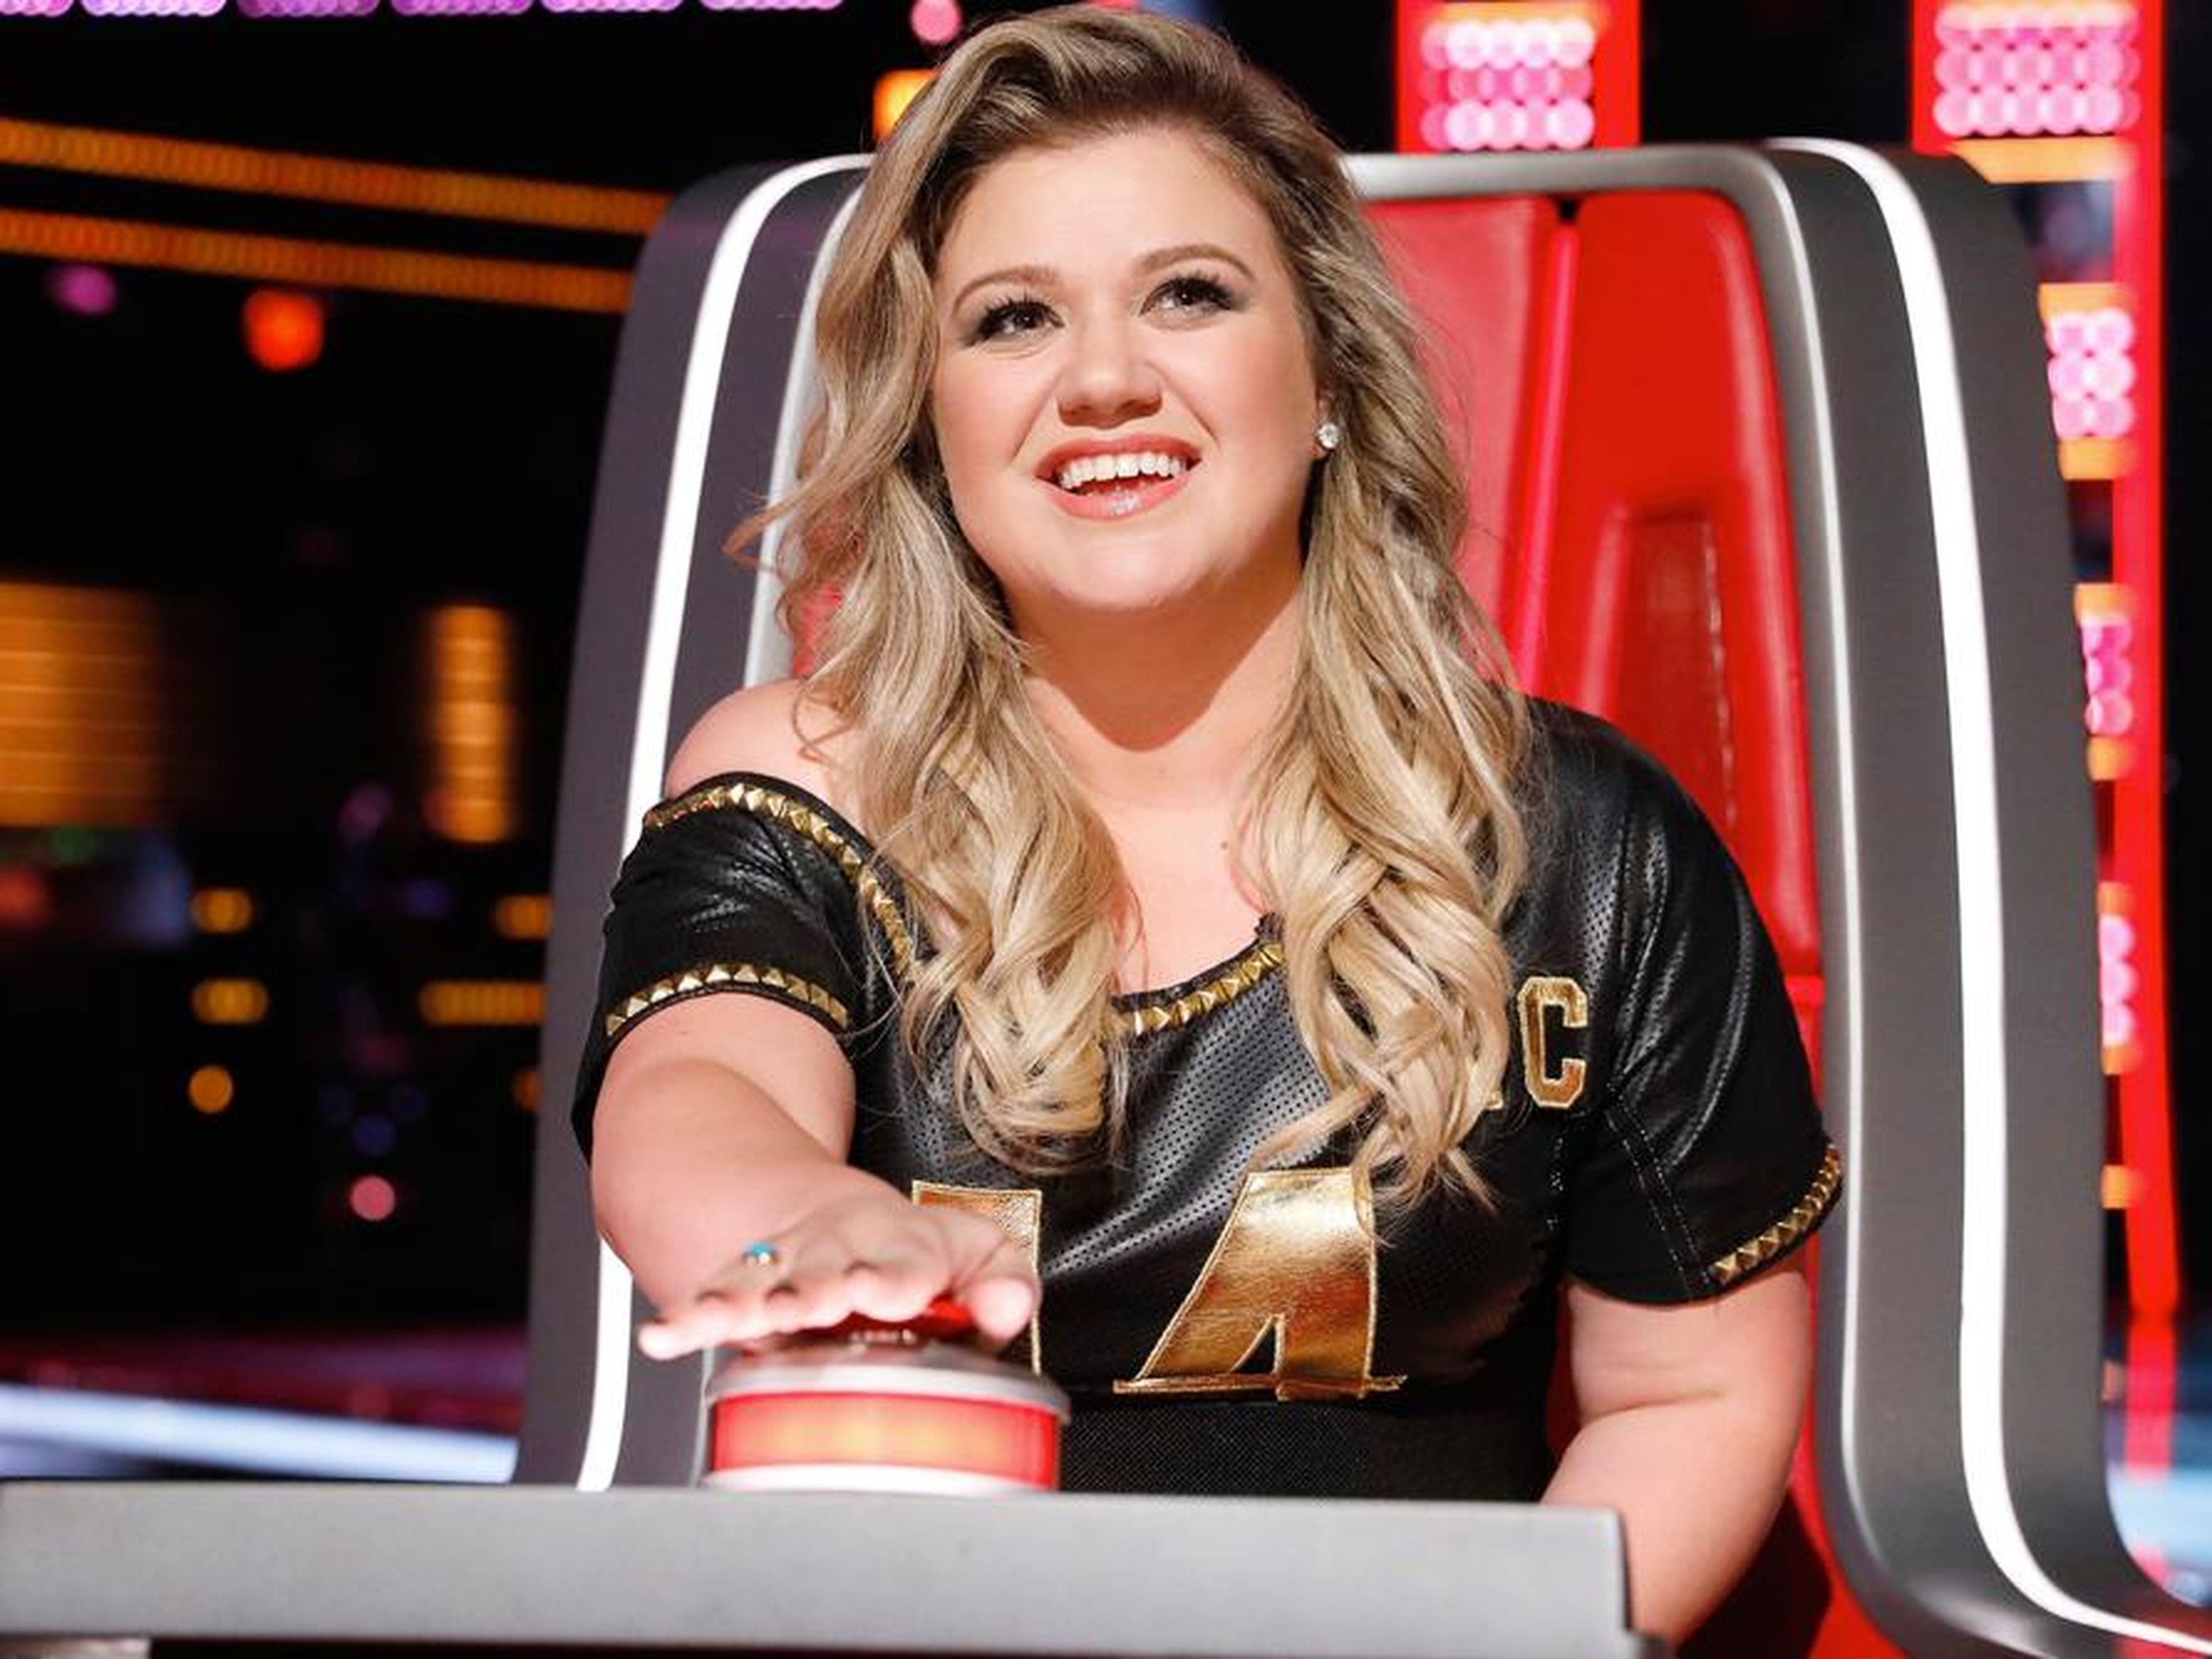 Kelly Clarkson on "The Voice"